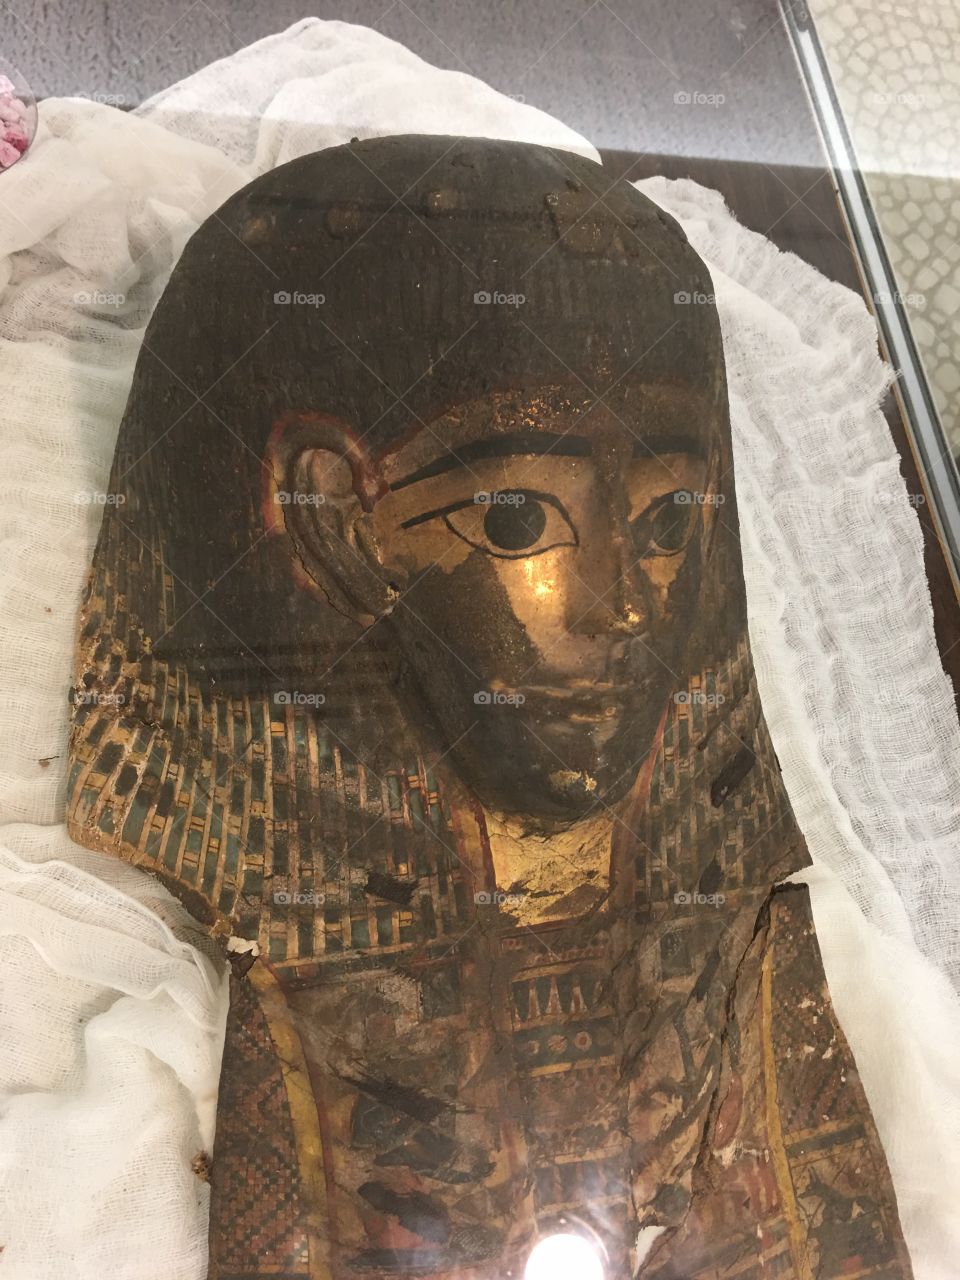 Egyptian death mask